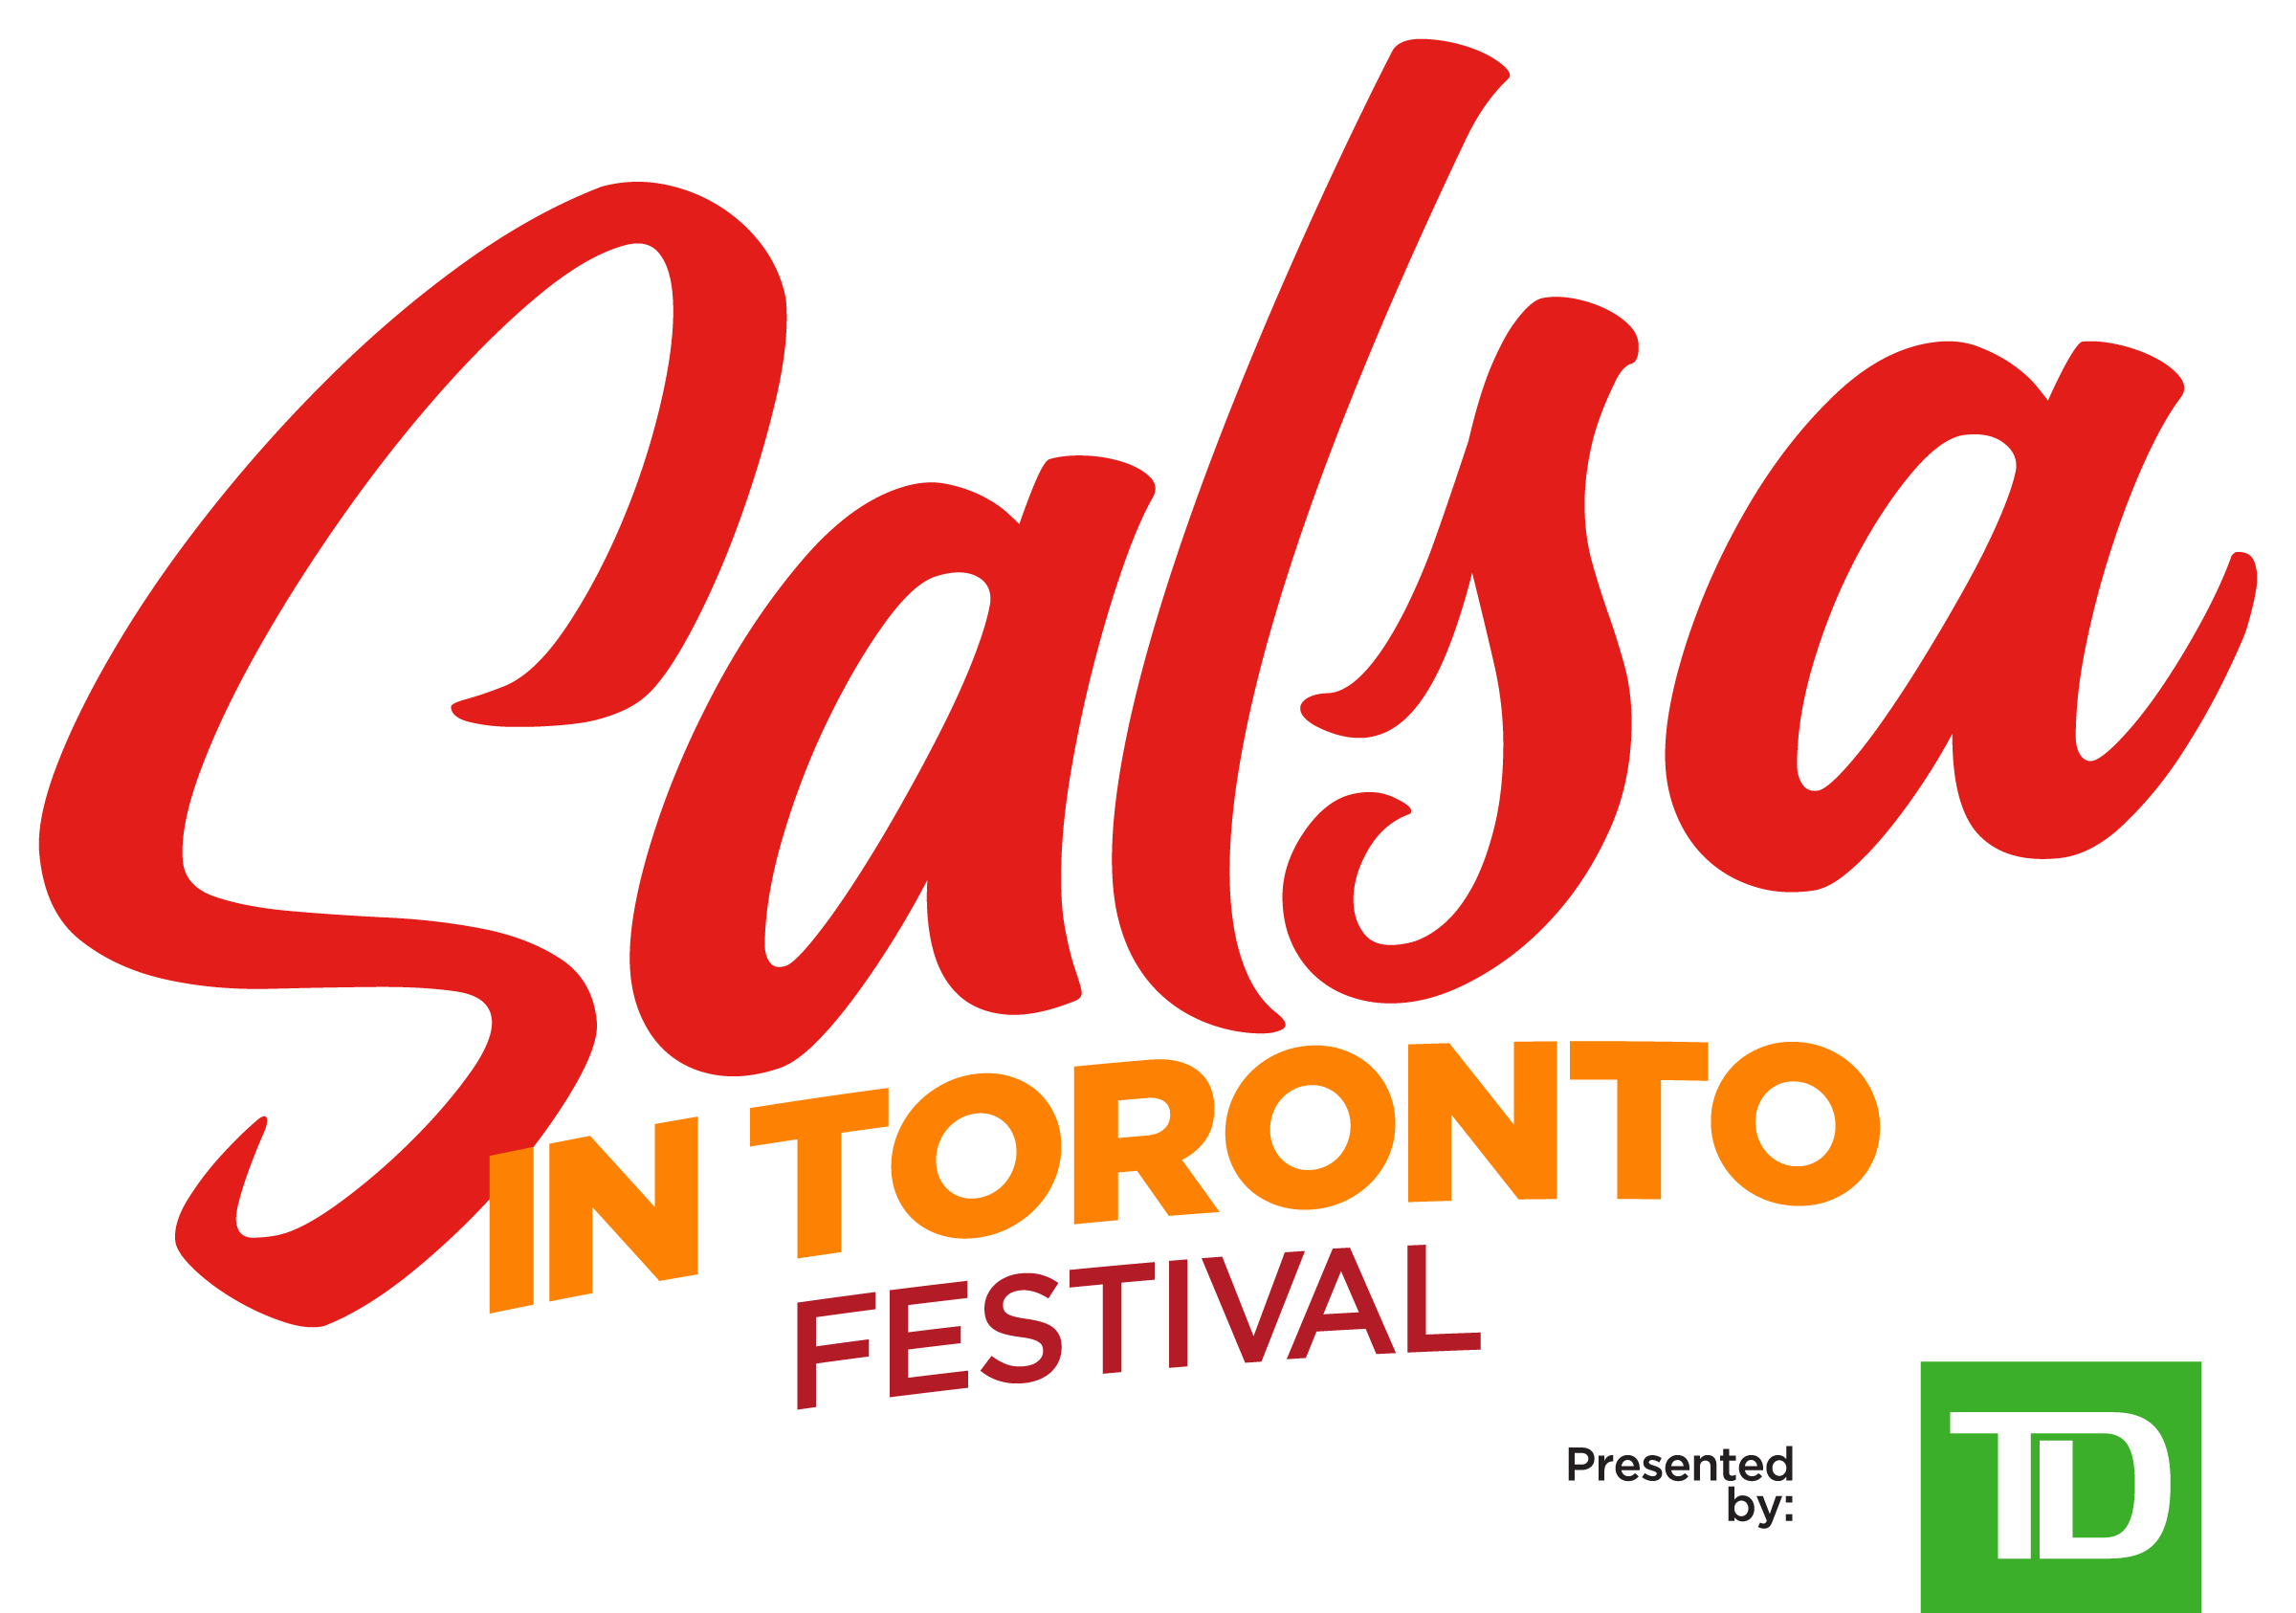 Salsa Logo - Events - TD Salsa in Toronto Festival